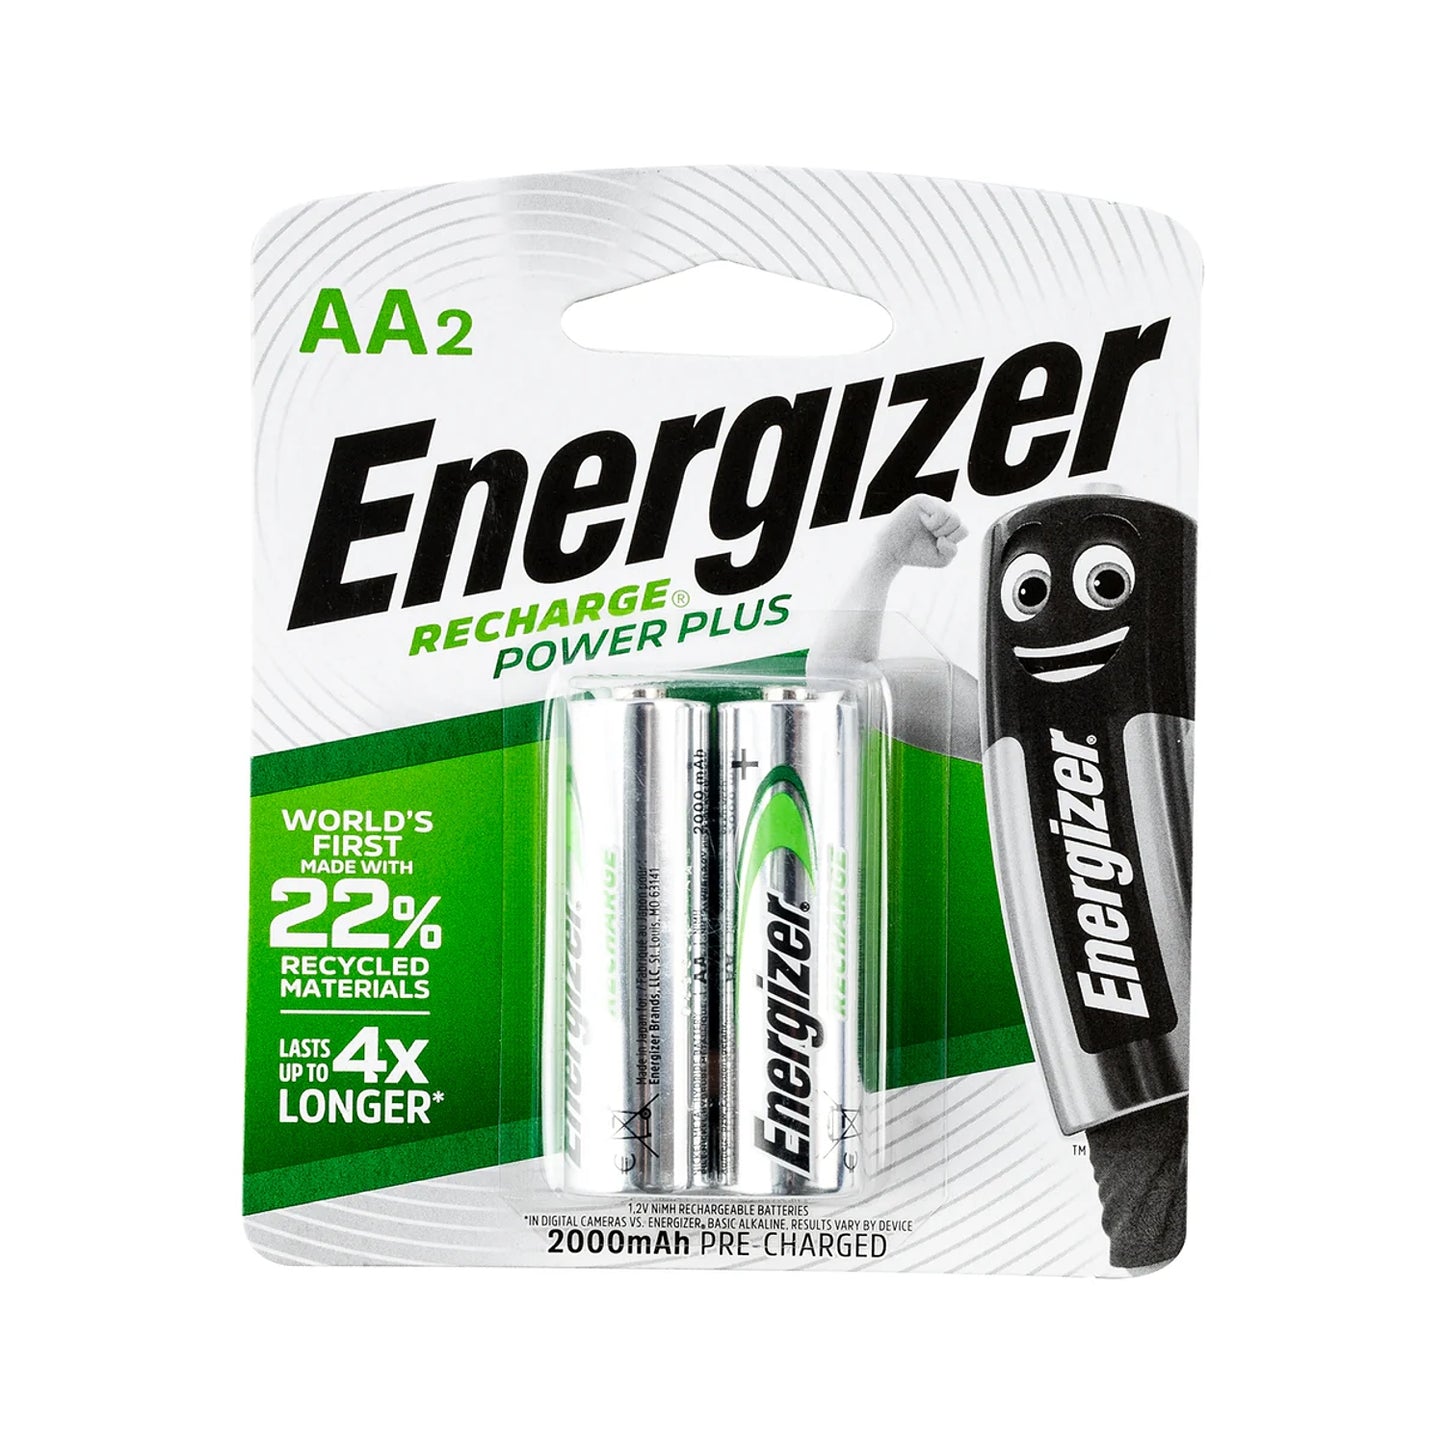 Energizer recharge 2000mah   aa - 2 pack (moq6)